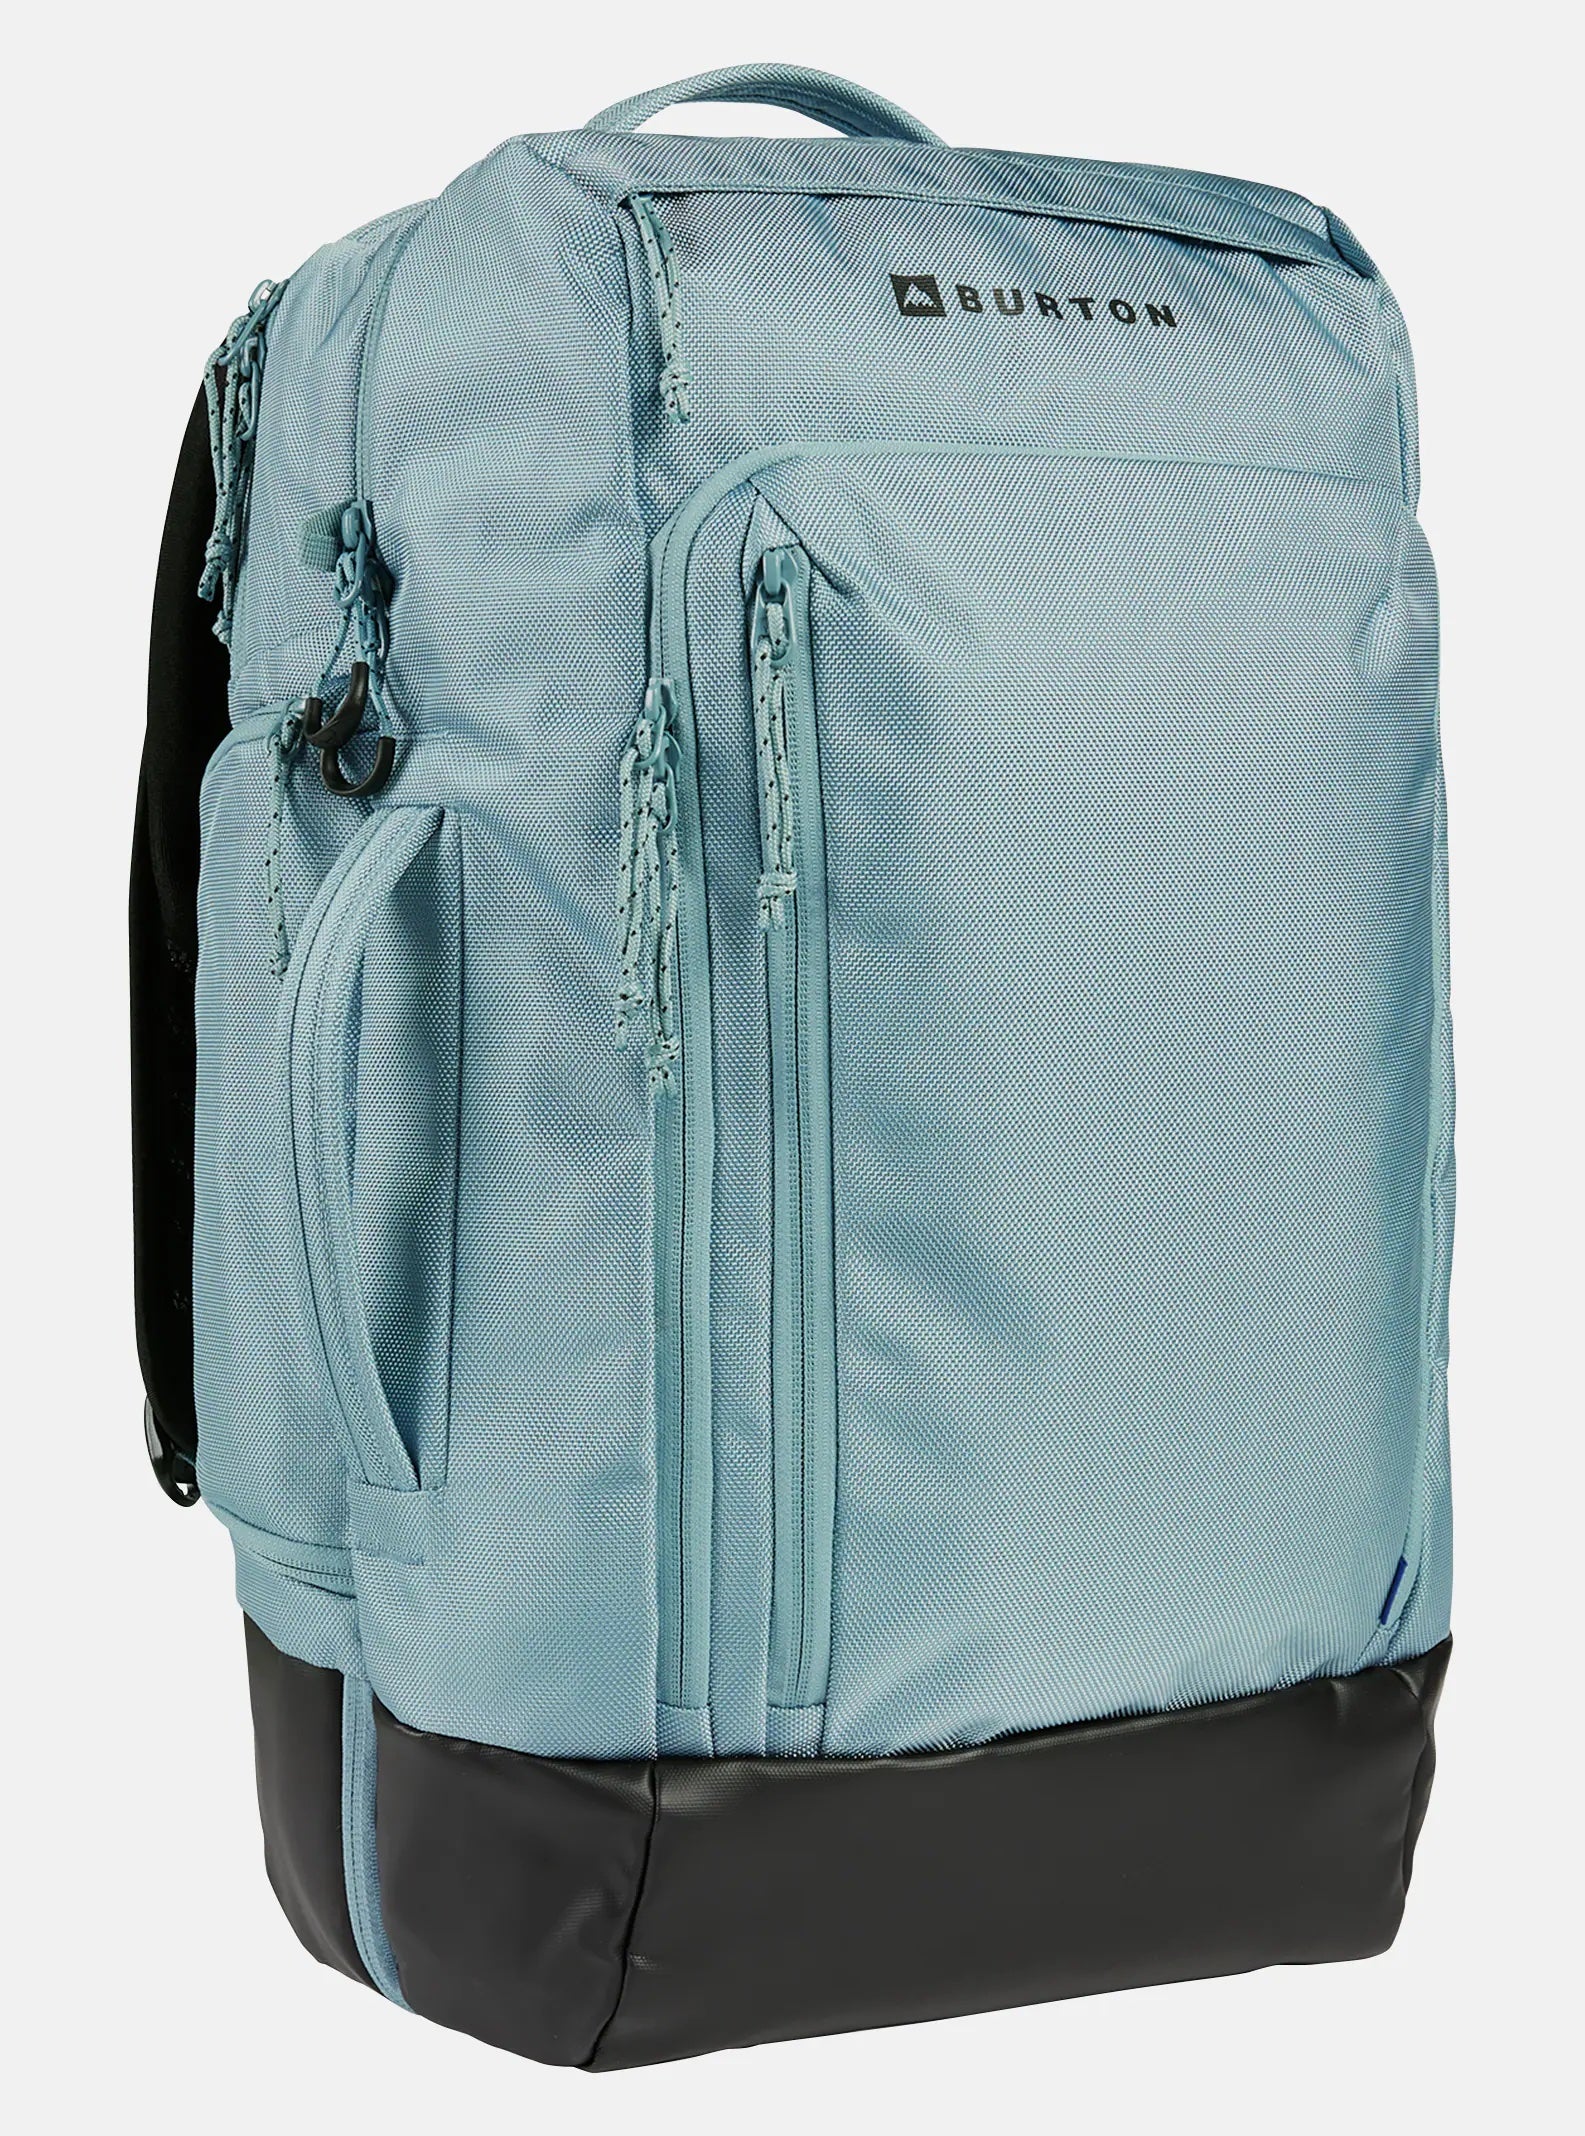 Plecak bagaż podręczny Burton Multipath 27L Travel Pack